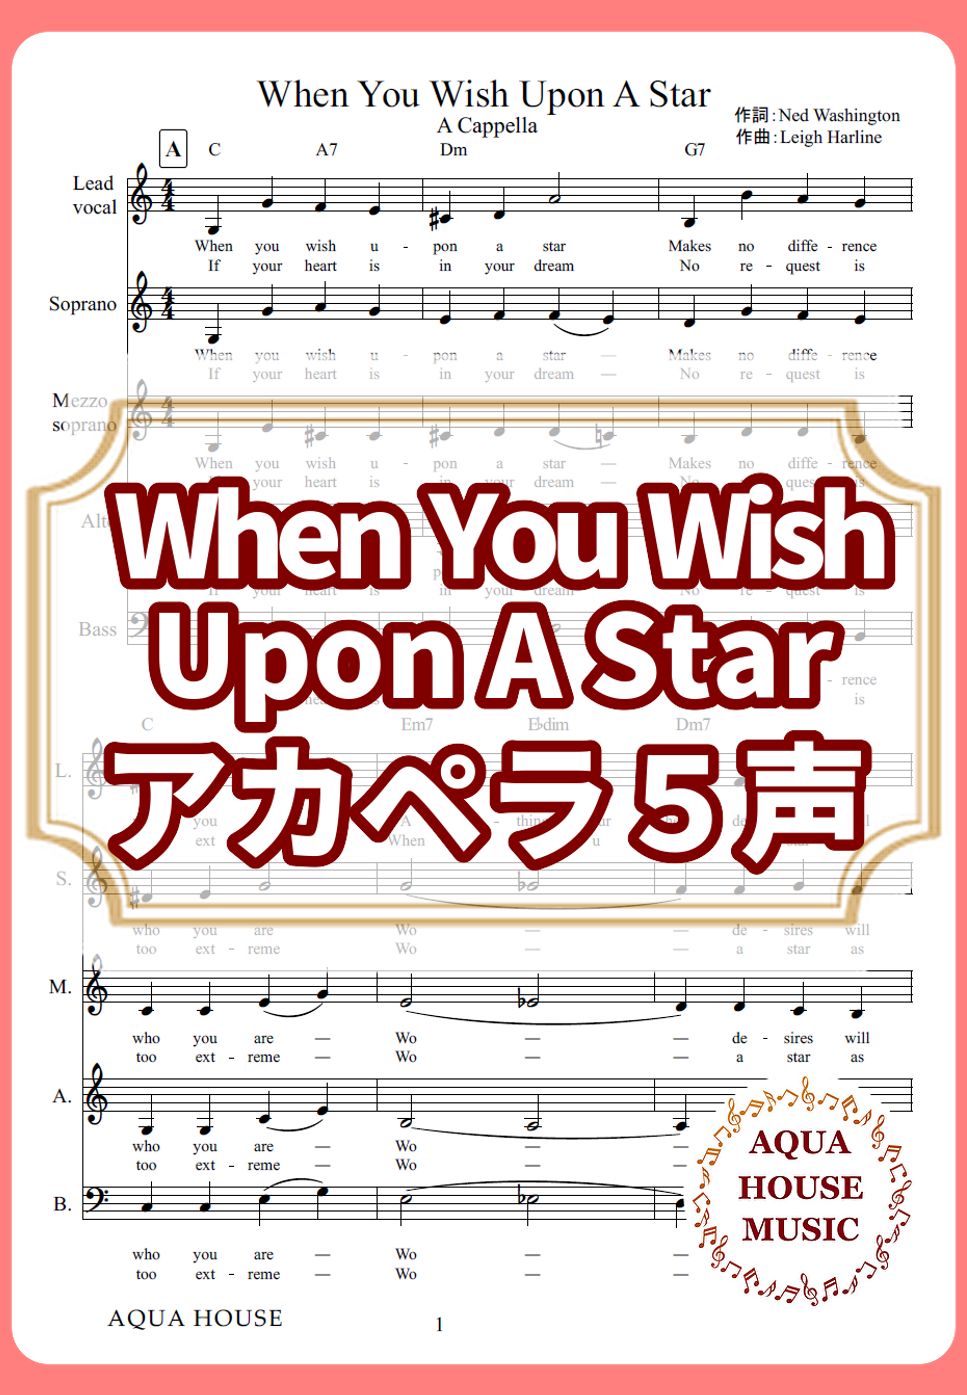 WishWish upon A Star #11